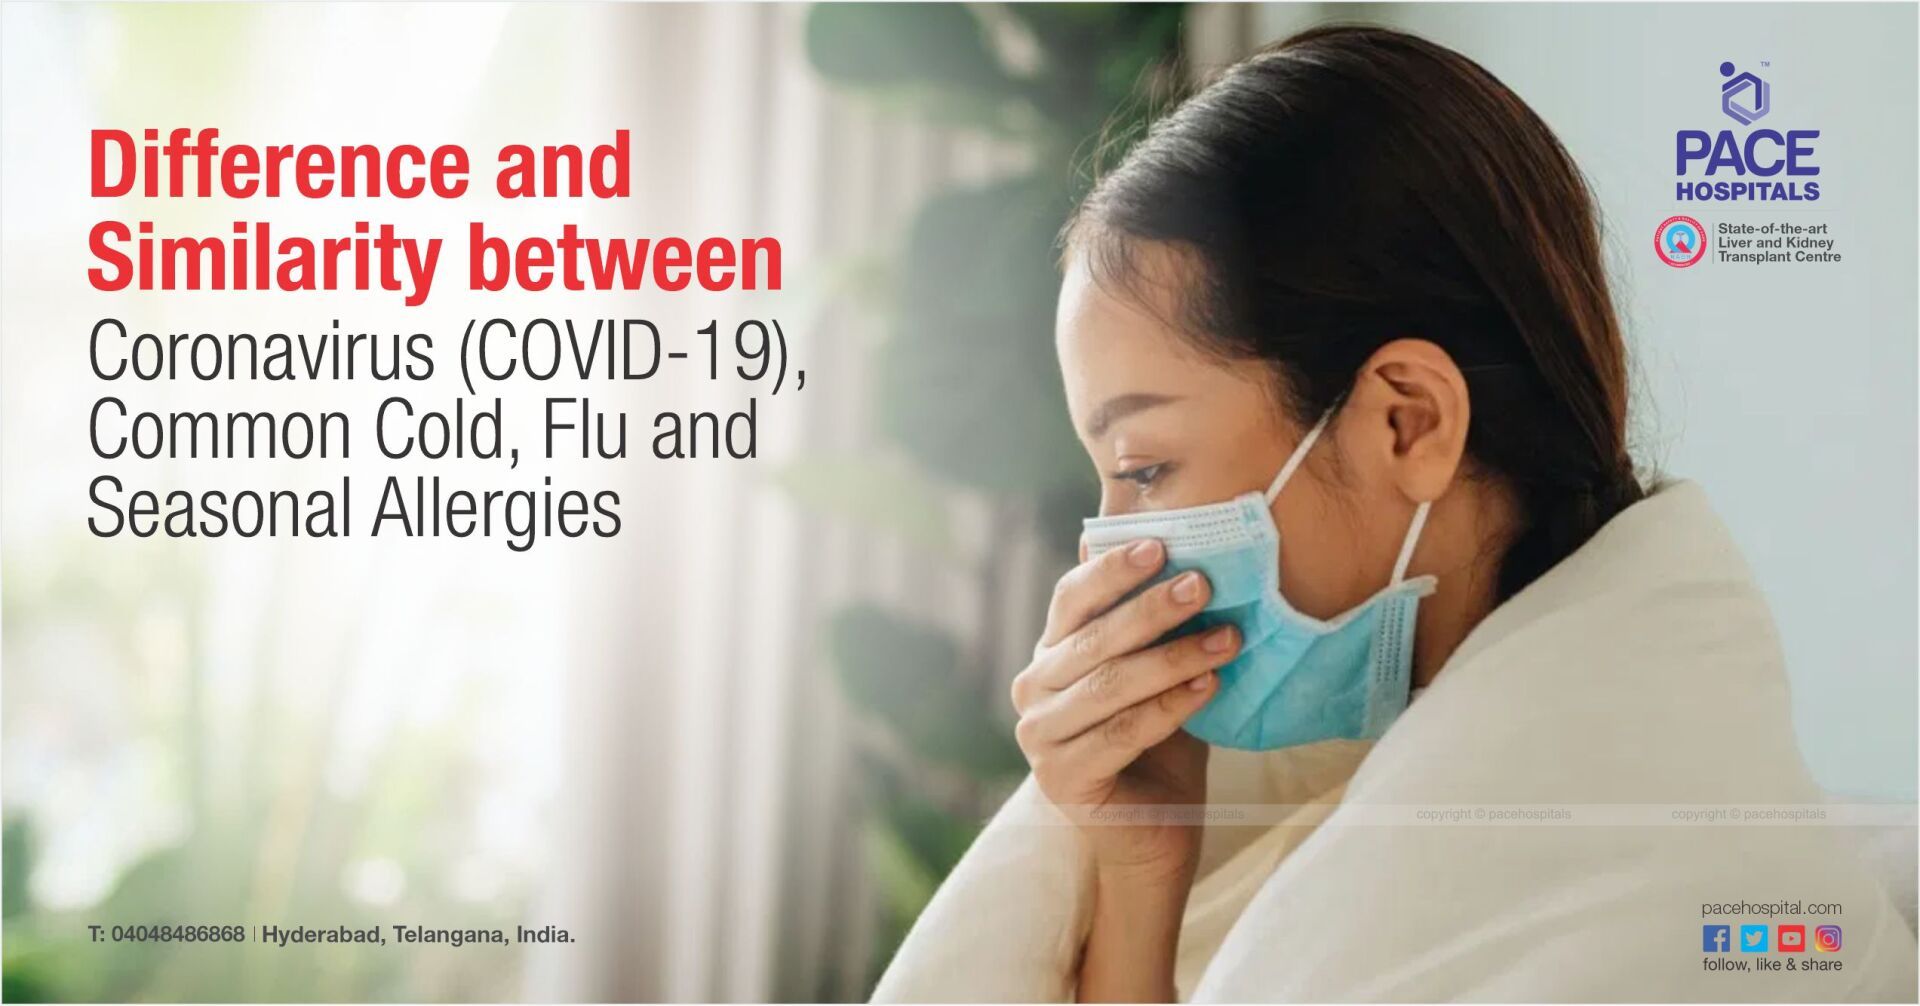 Coronavirus vs Common Cold vs Flu symptoms vs Seasonal Allergies, Difference and Similarity between